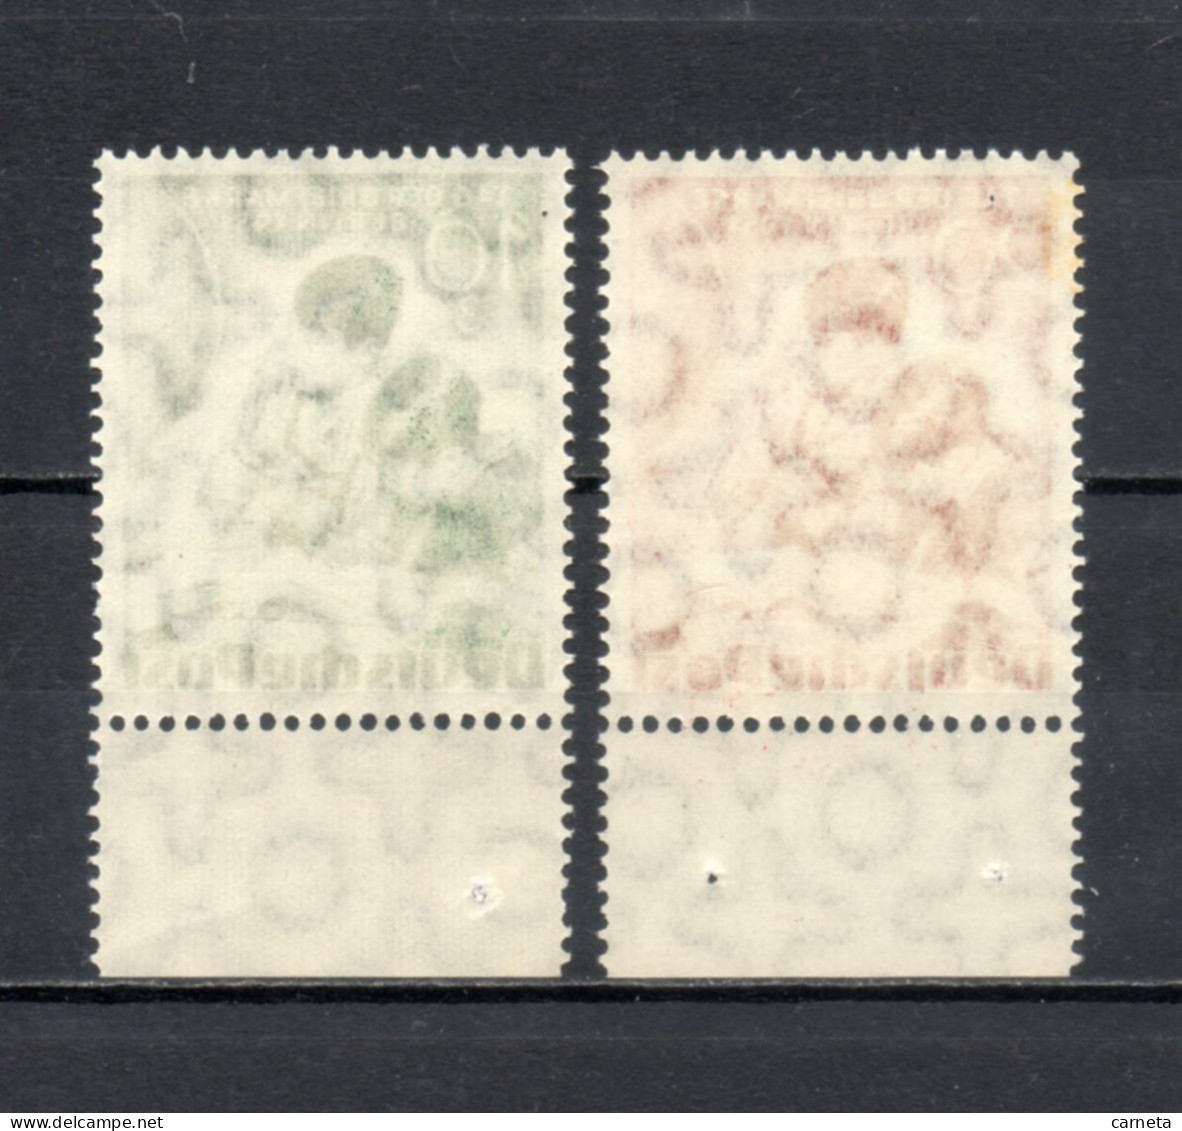 ALLEMAGNE BERLIN    N° 66 + 67   NEUFS SANS CHARNIERE   COTE 75.00€   JOURNEE DU TIMBRE - Unused Stamps